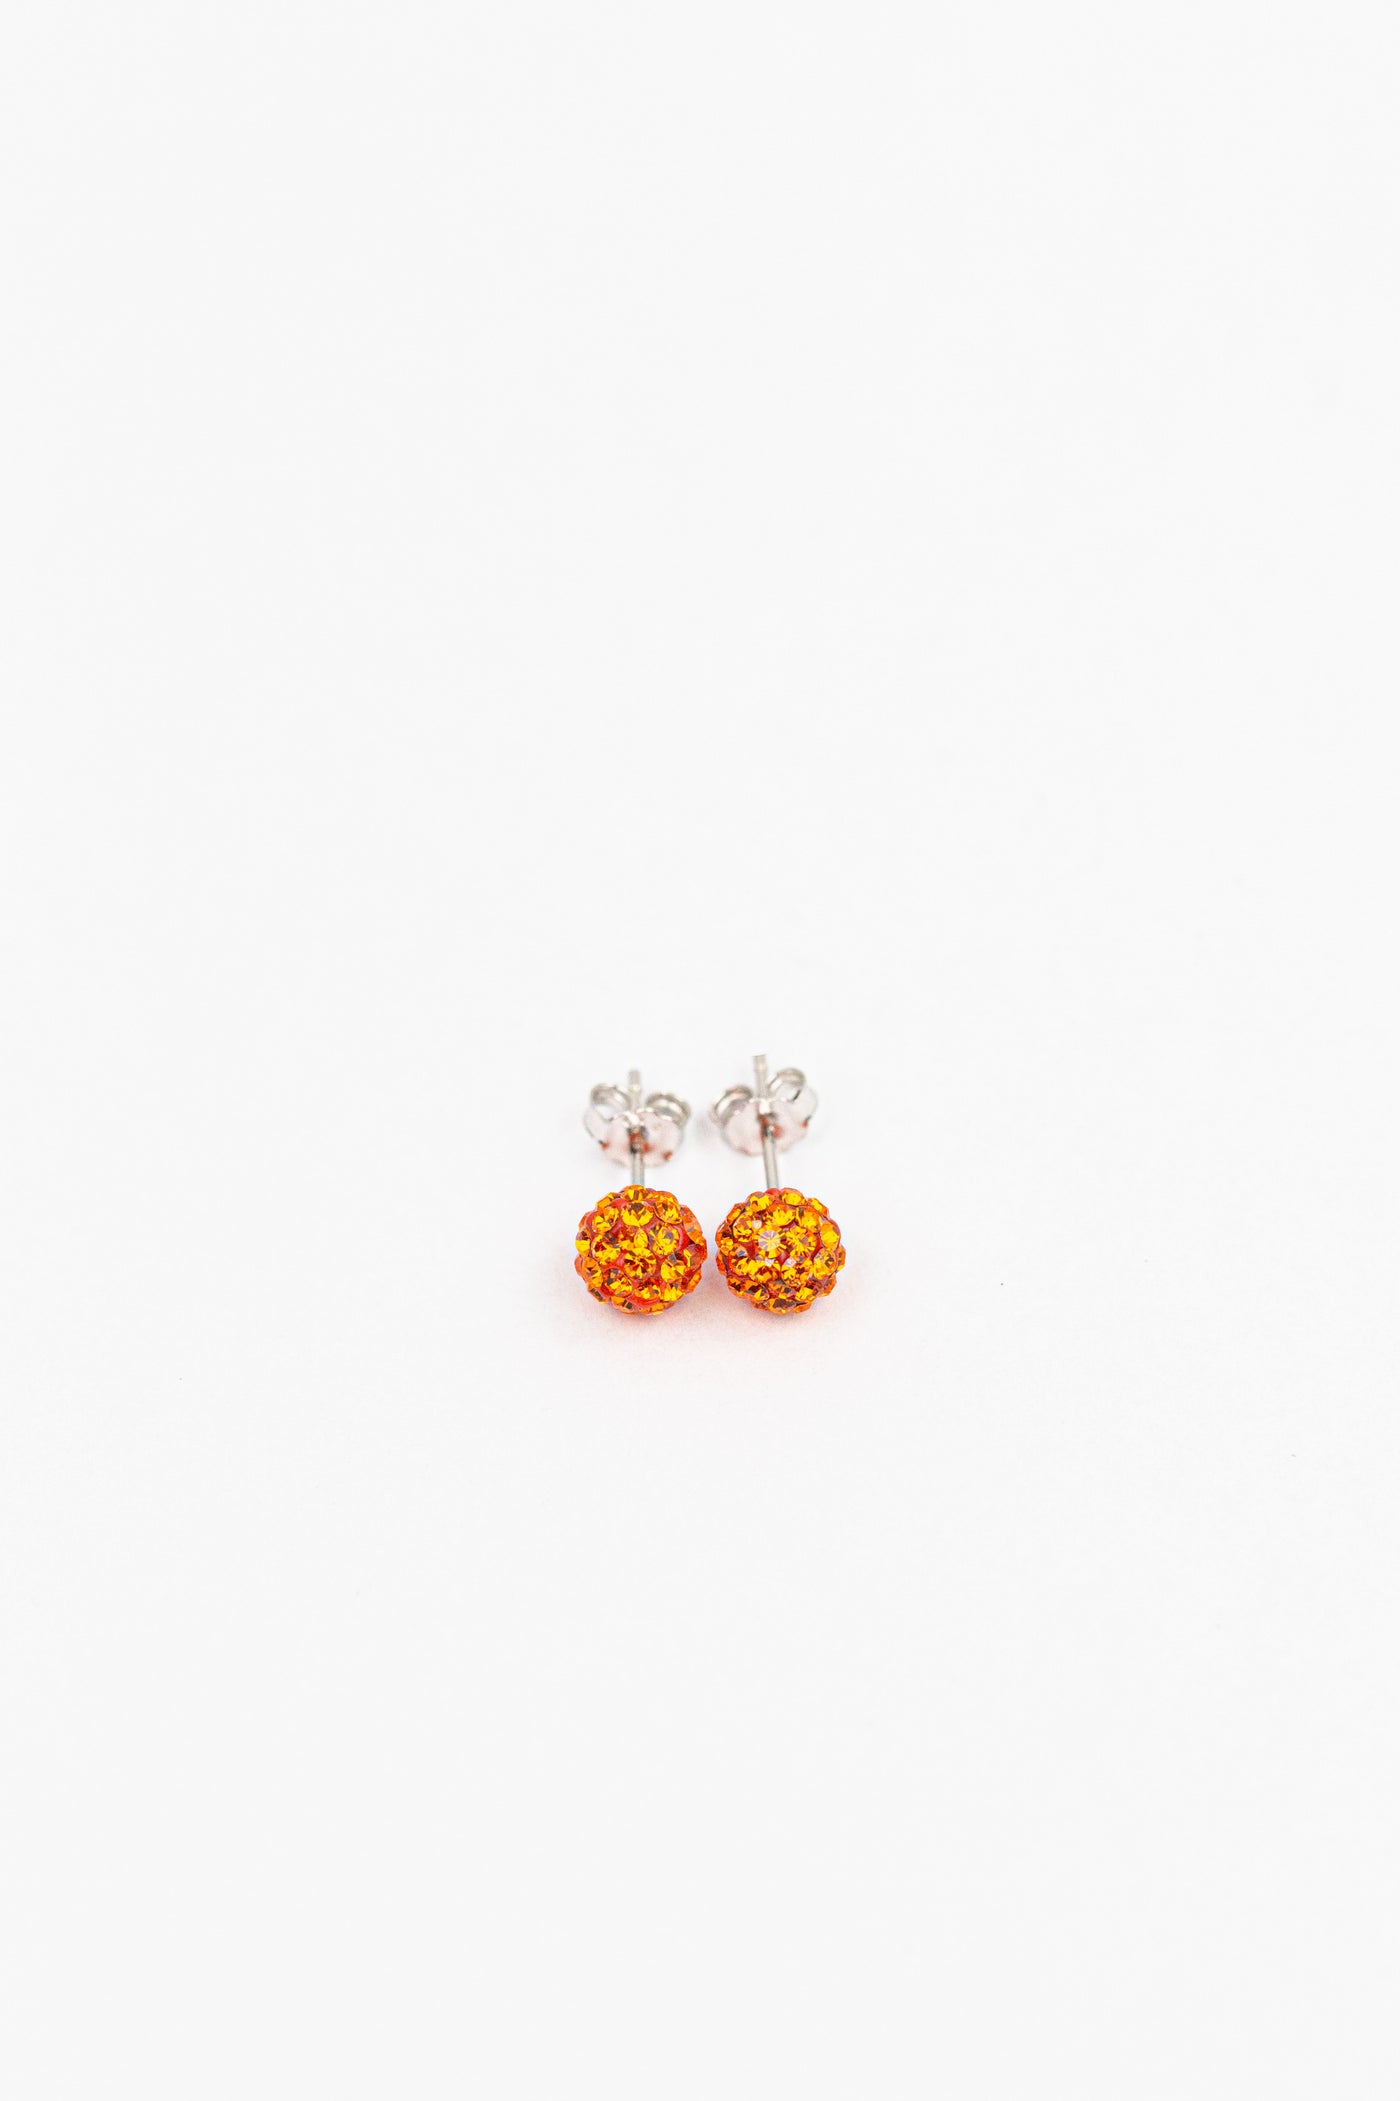 6mm Mini Disco Ball Crystal Silver Stud Earrings in Orange | Annie and Sisters | sister stud earrings, for kids, children's jewelry, kid's jewelry, best friend